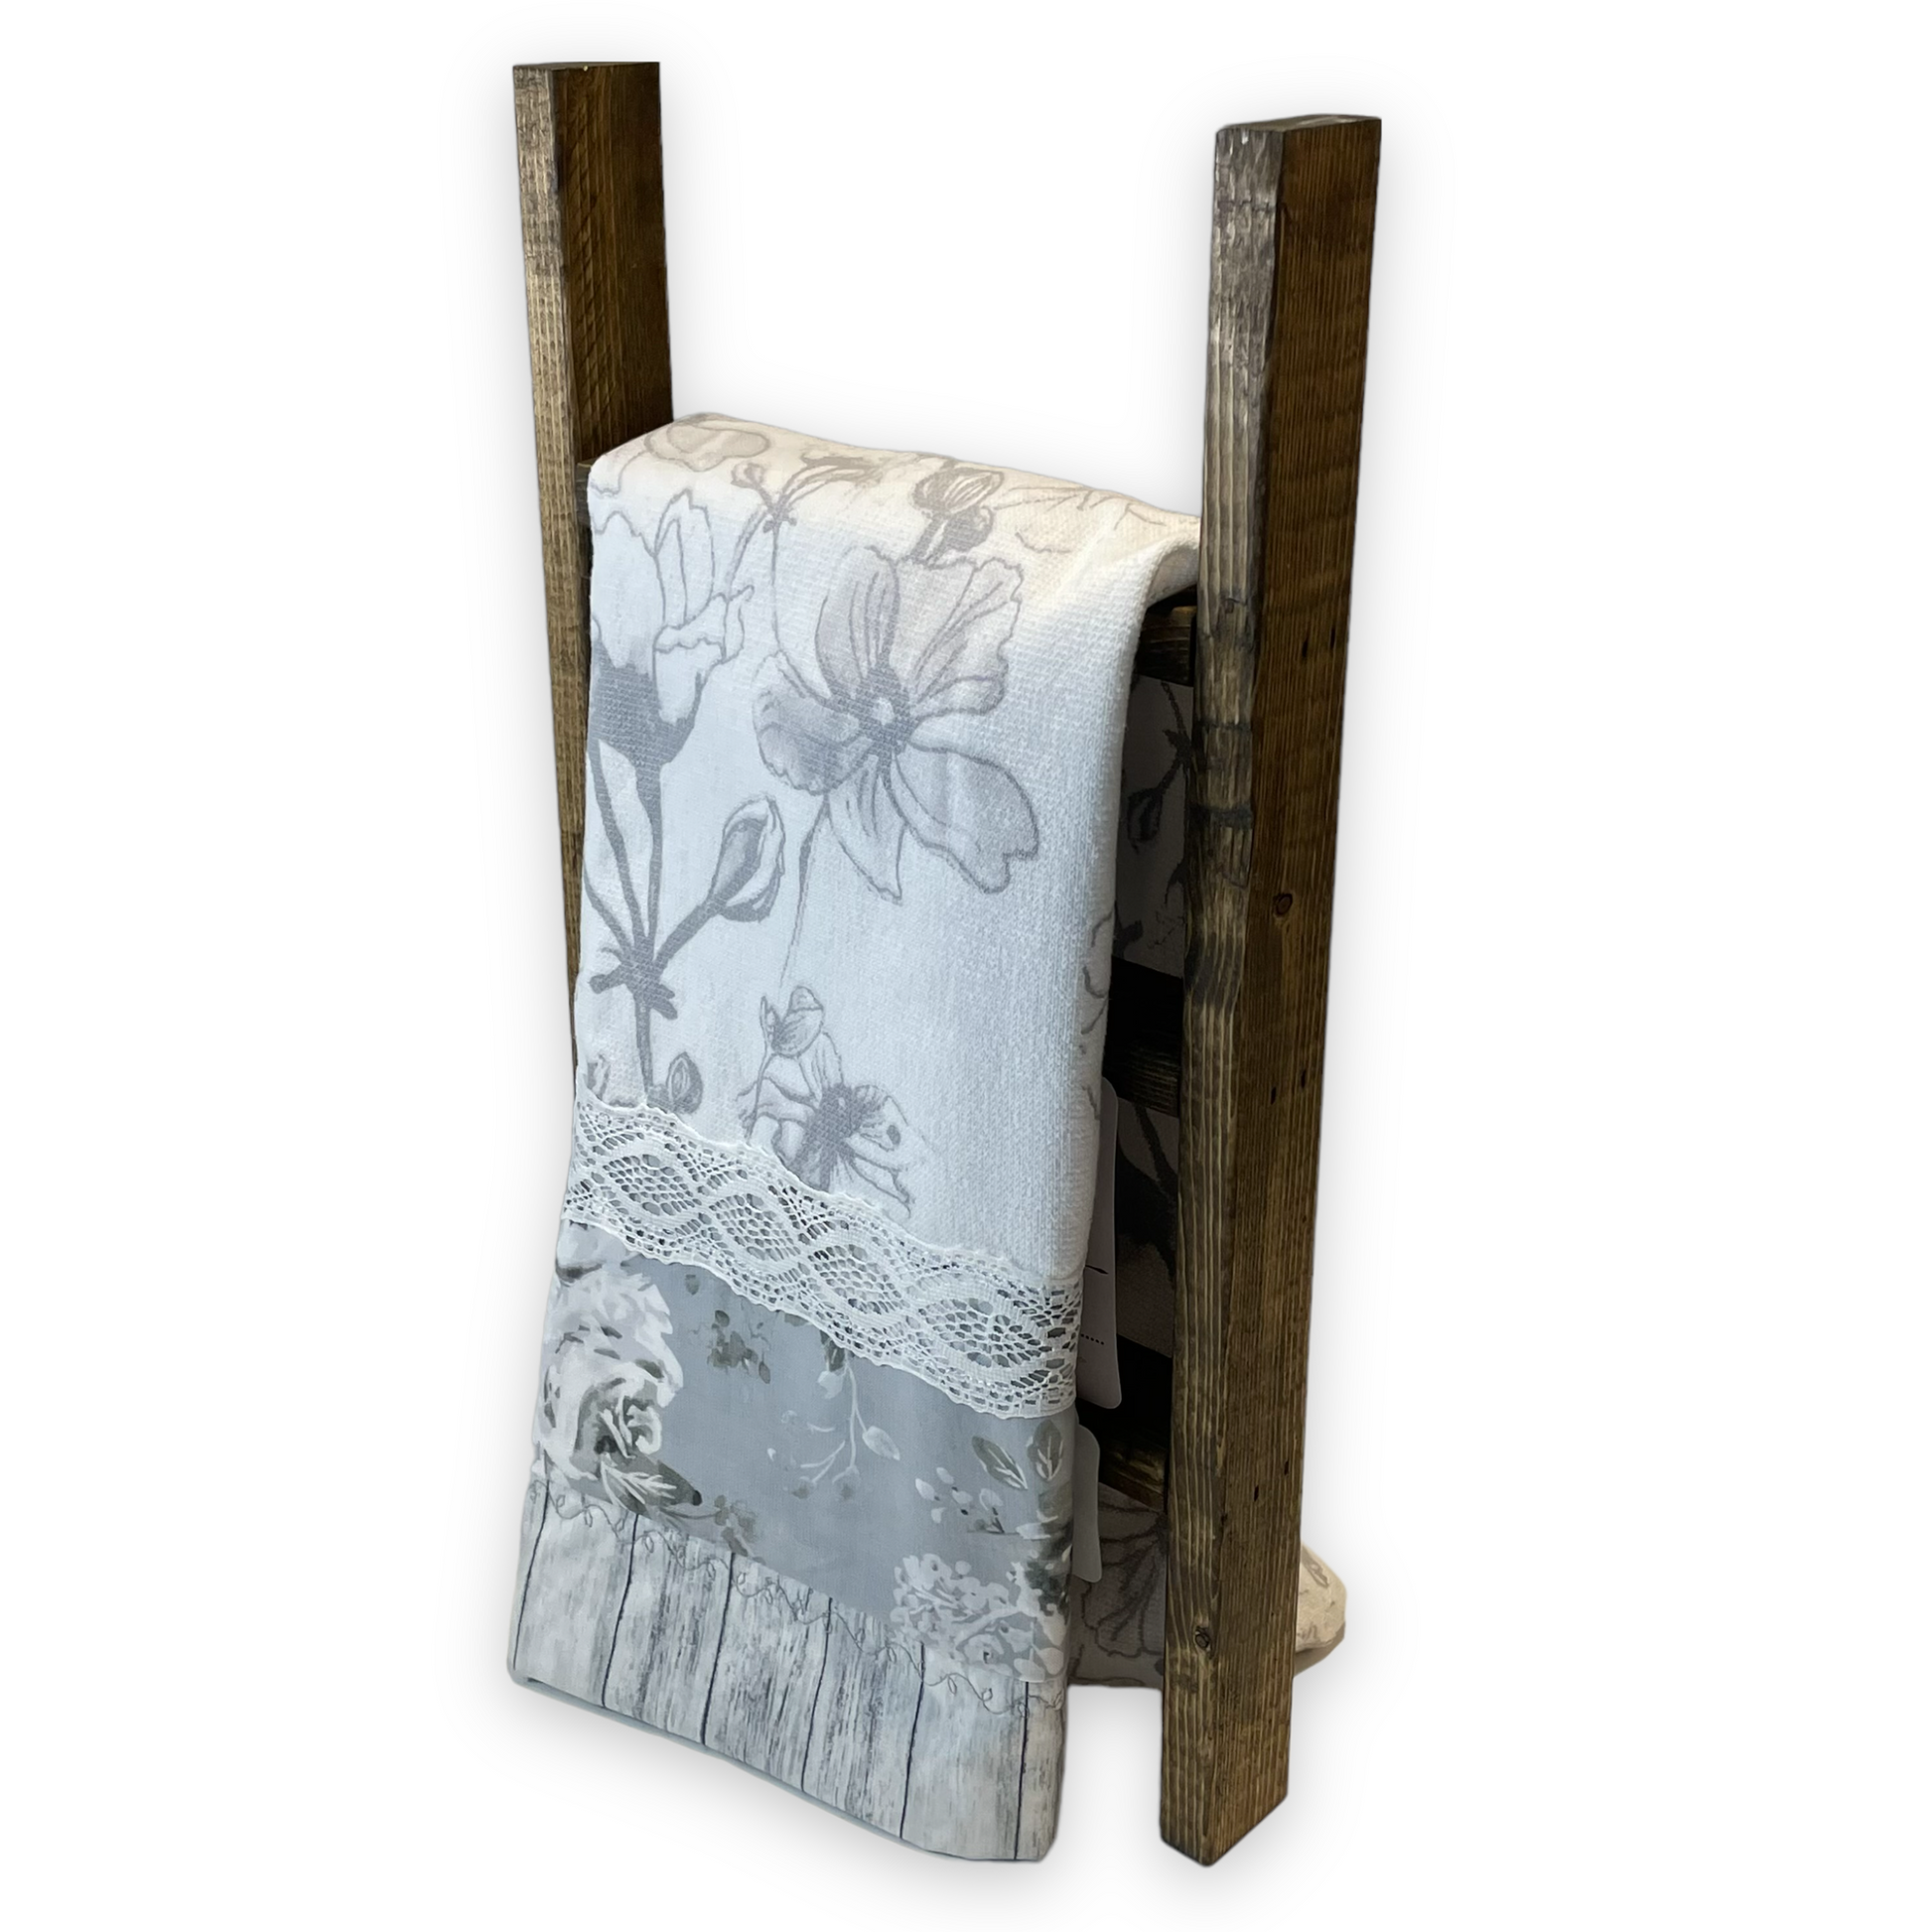 Grey and White Flowered Kitchen Tea Towel, Cute Modern Farmhouse Dish Towel - Home Stitchery Decor